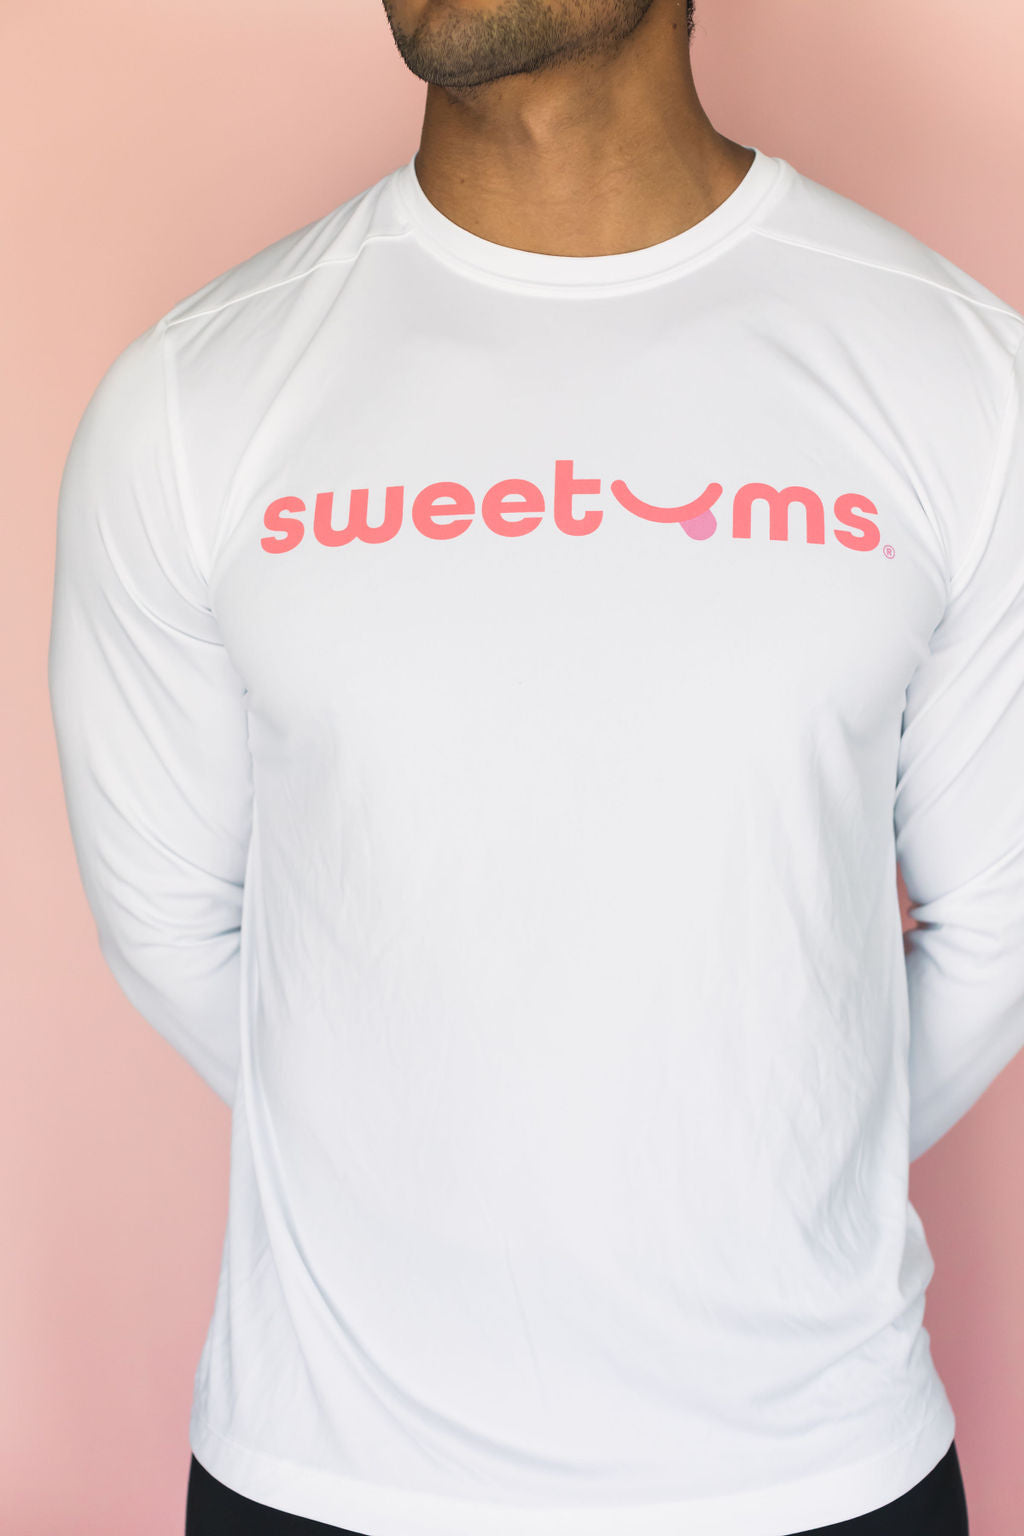 Sweetums t-shirt scene